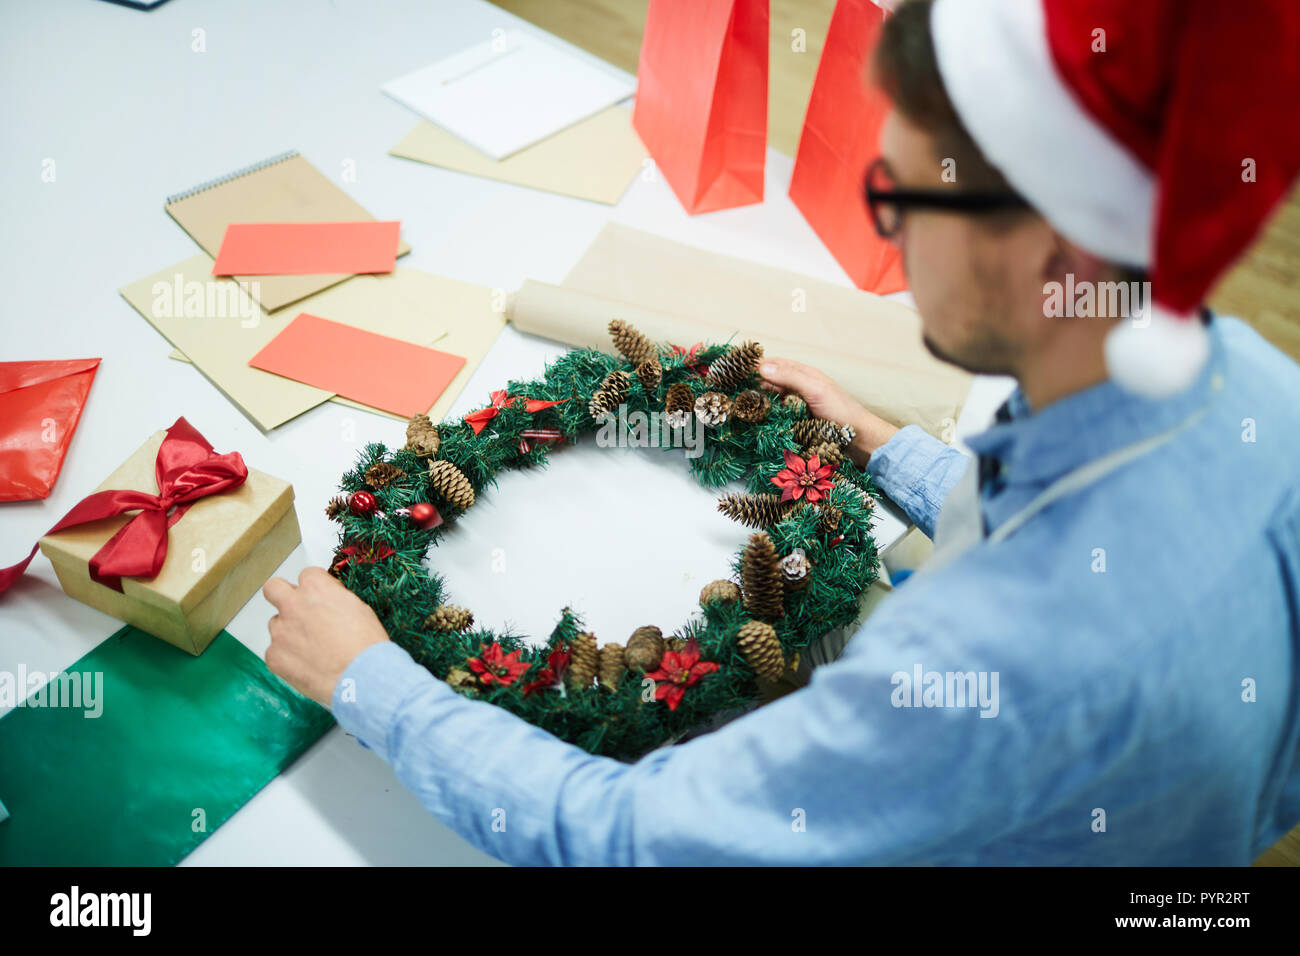 Busy man decorating Christmas wreath Stock Photo